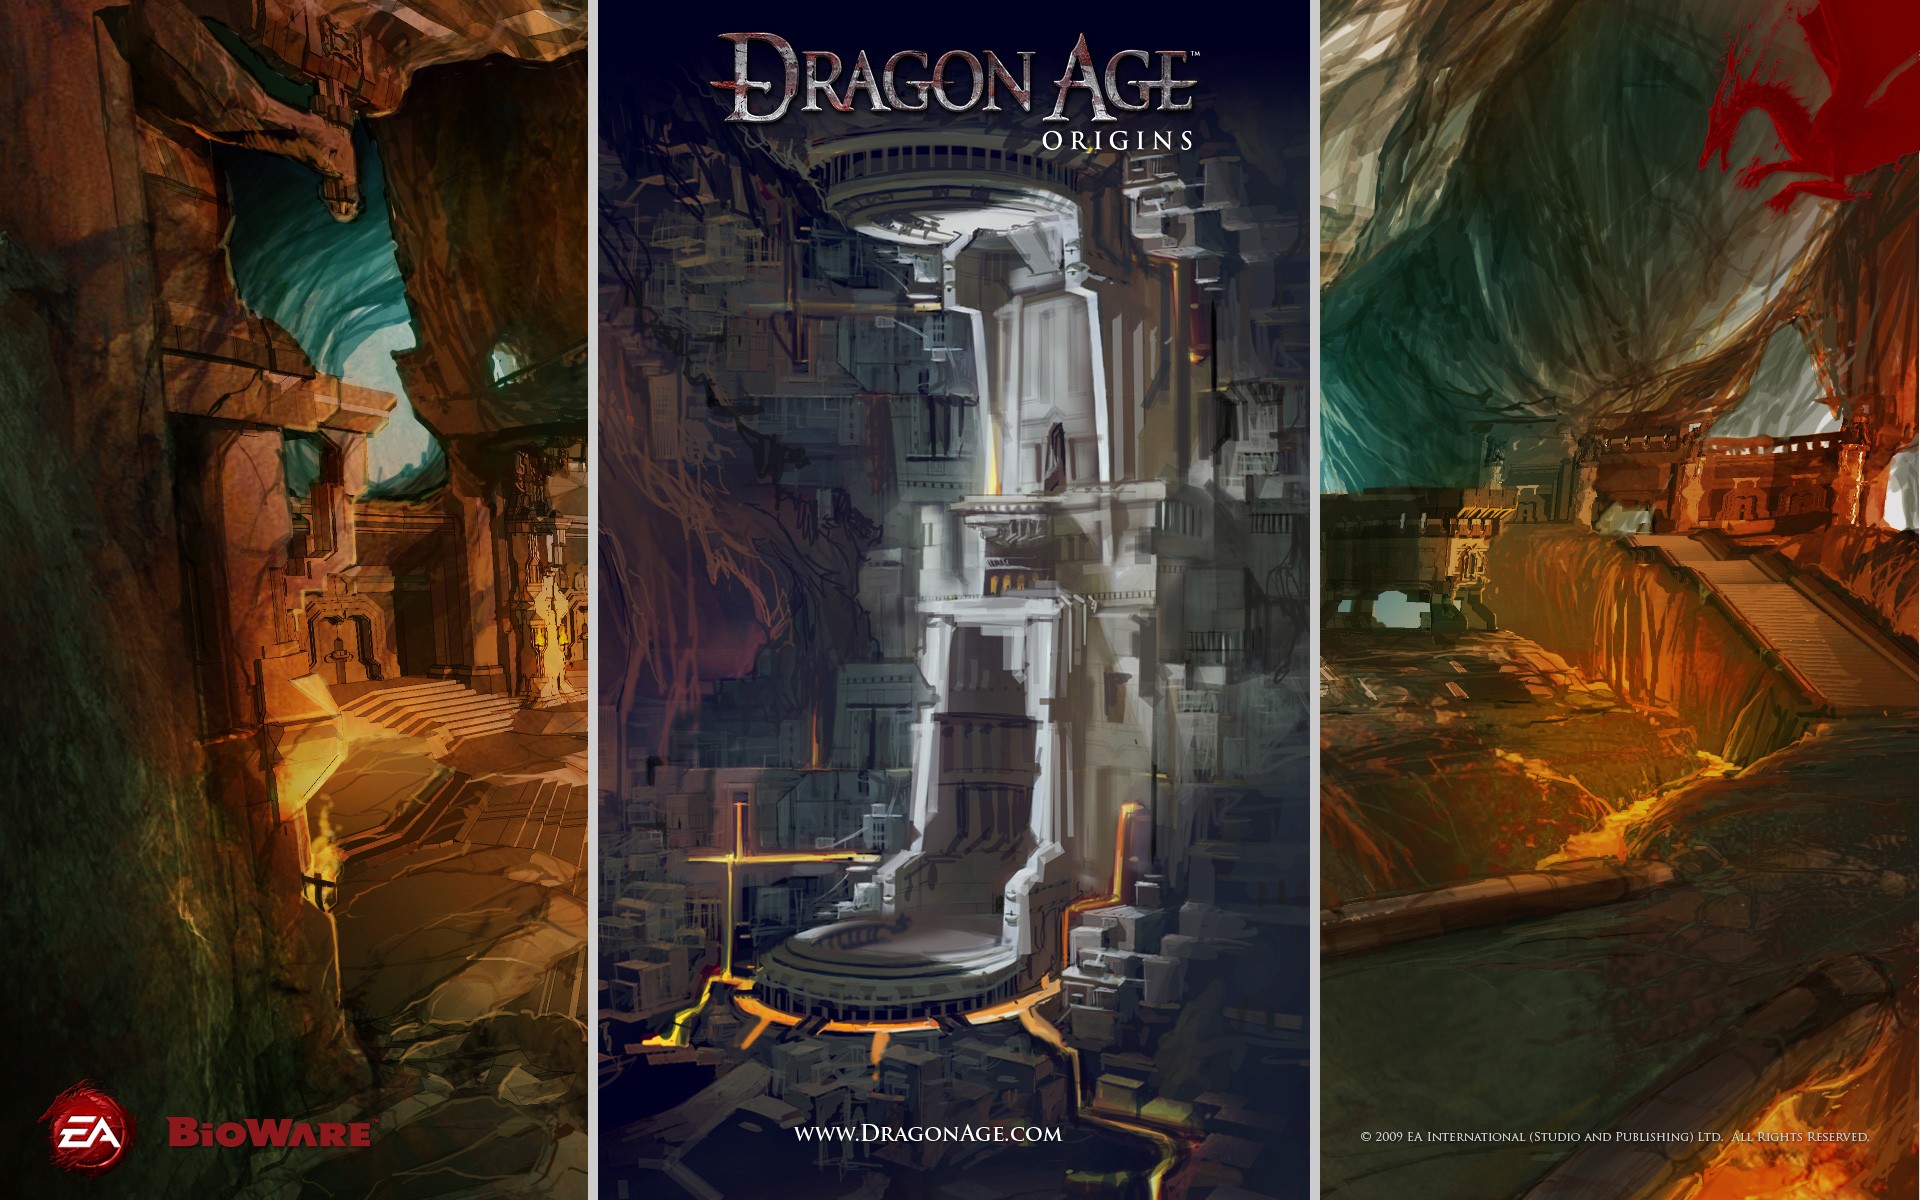 General 1920x1200 Dragon Age: Origins 2009 (Year) video games video game art collage Bioware RPG PC gaming